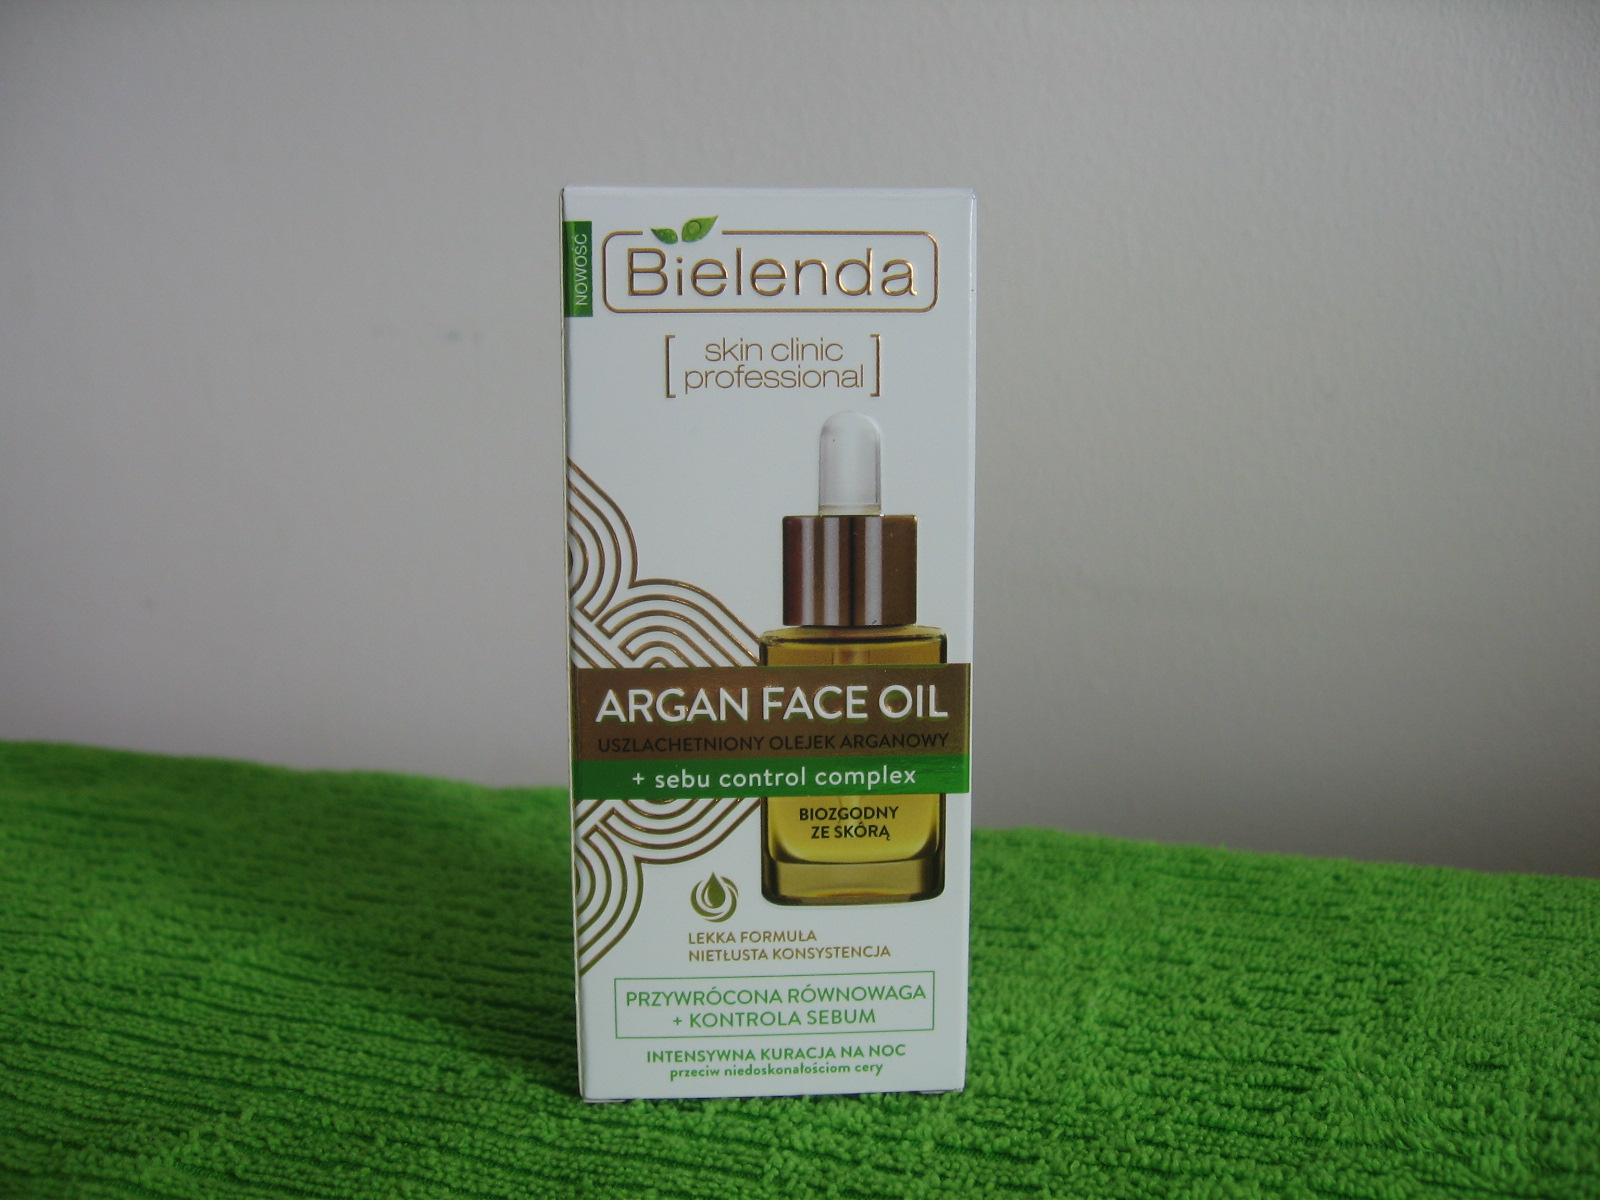 Argan Face Oil Uszlachetniony olejek arganowy + sebu control complex, Bielenda